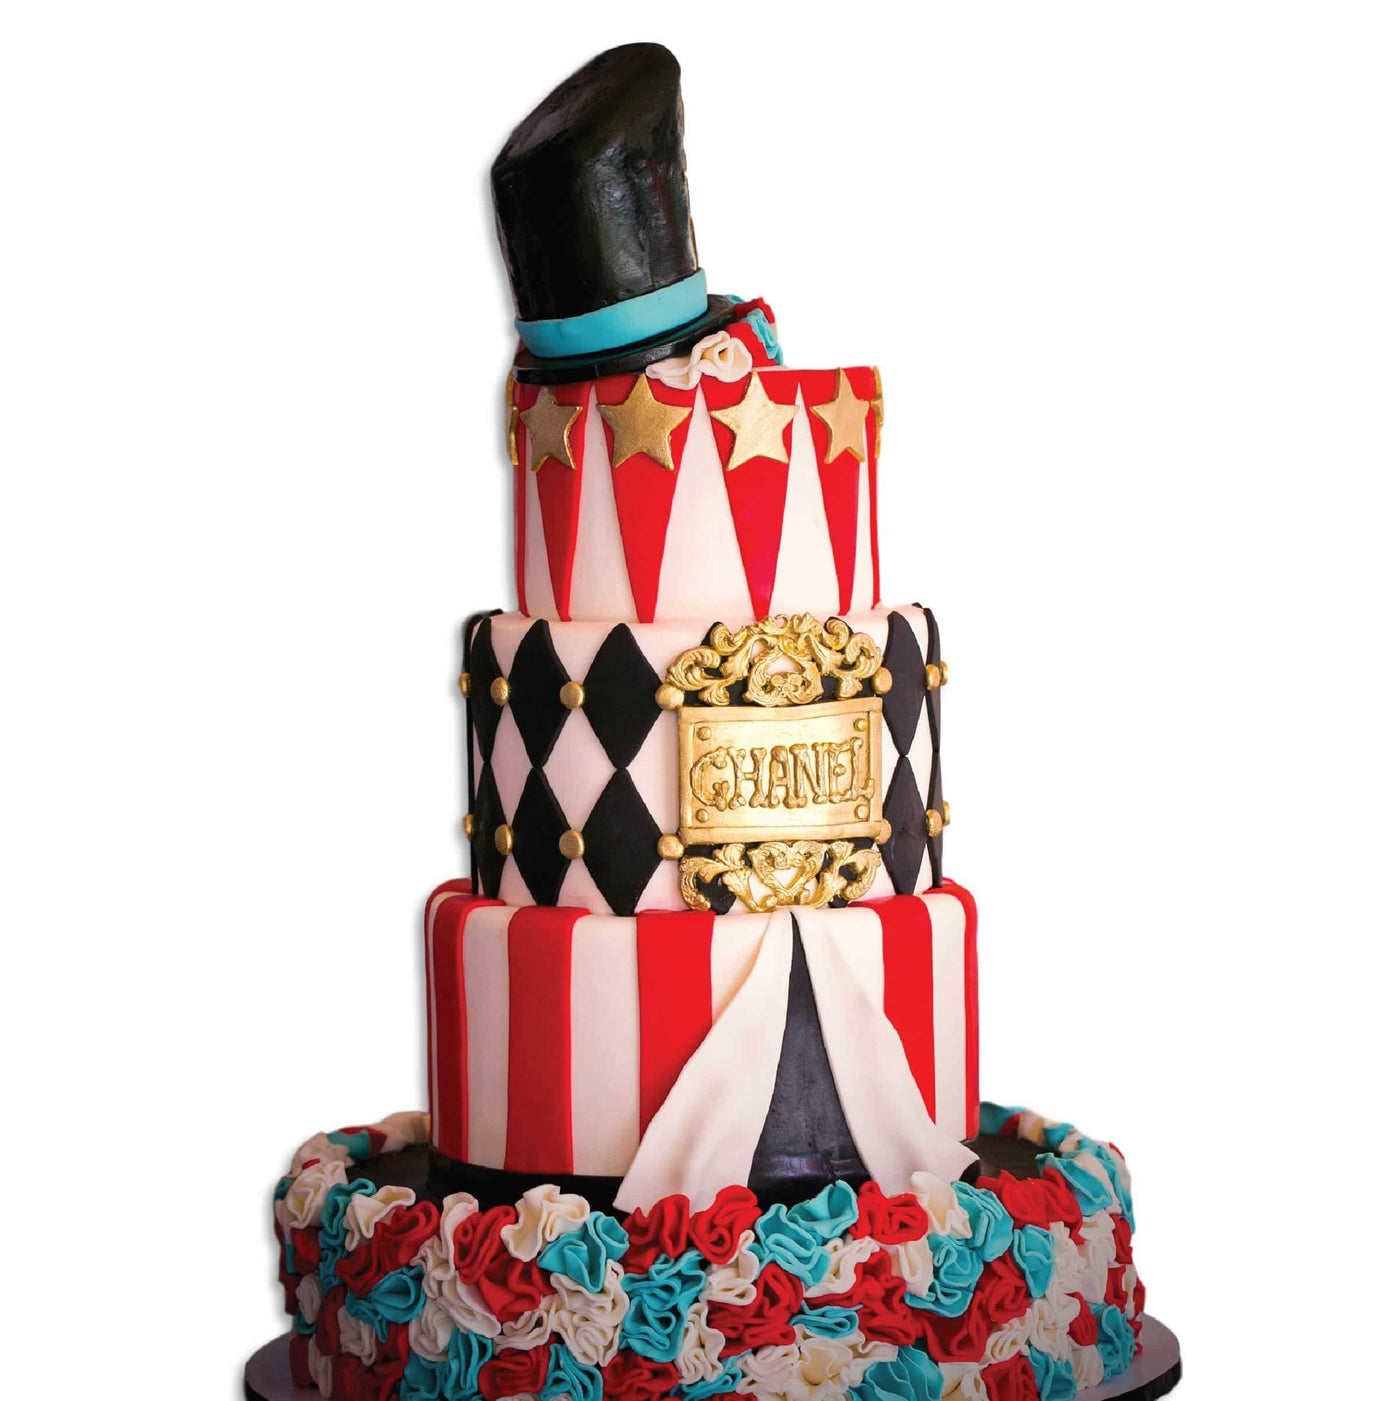 Carnival Circus Tent Cake - Sweet E's Bake Shop - The Cake Shop